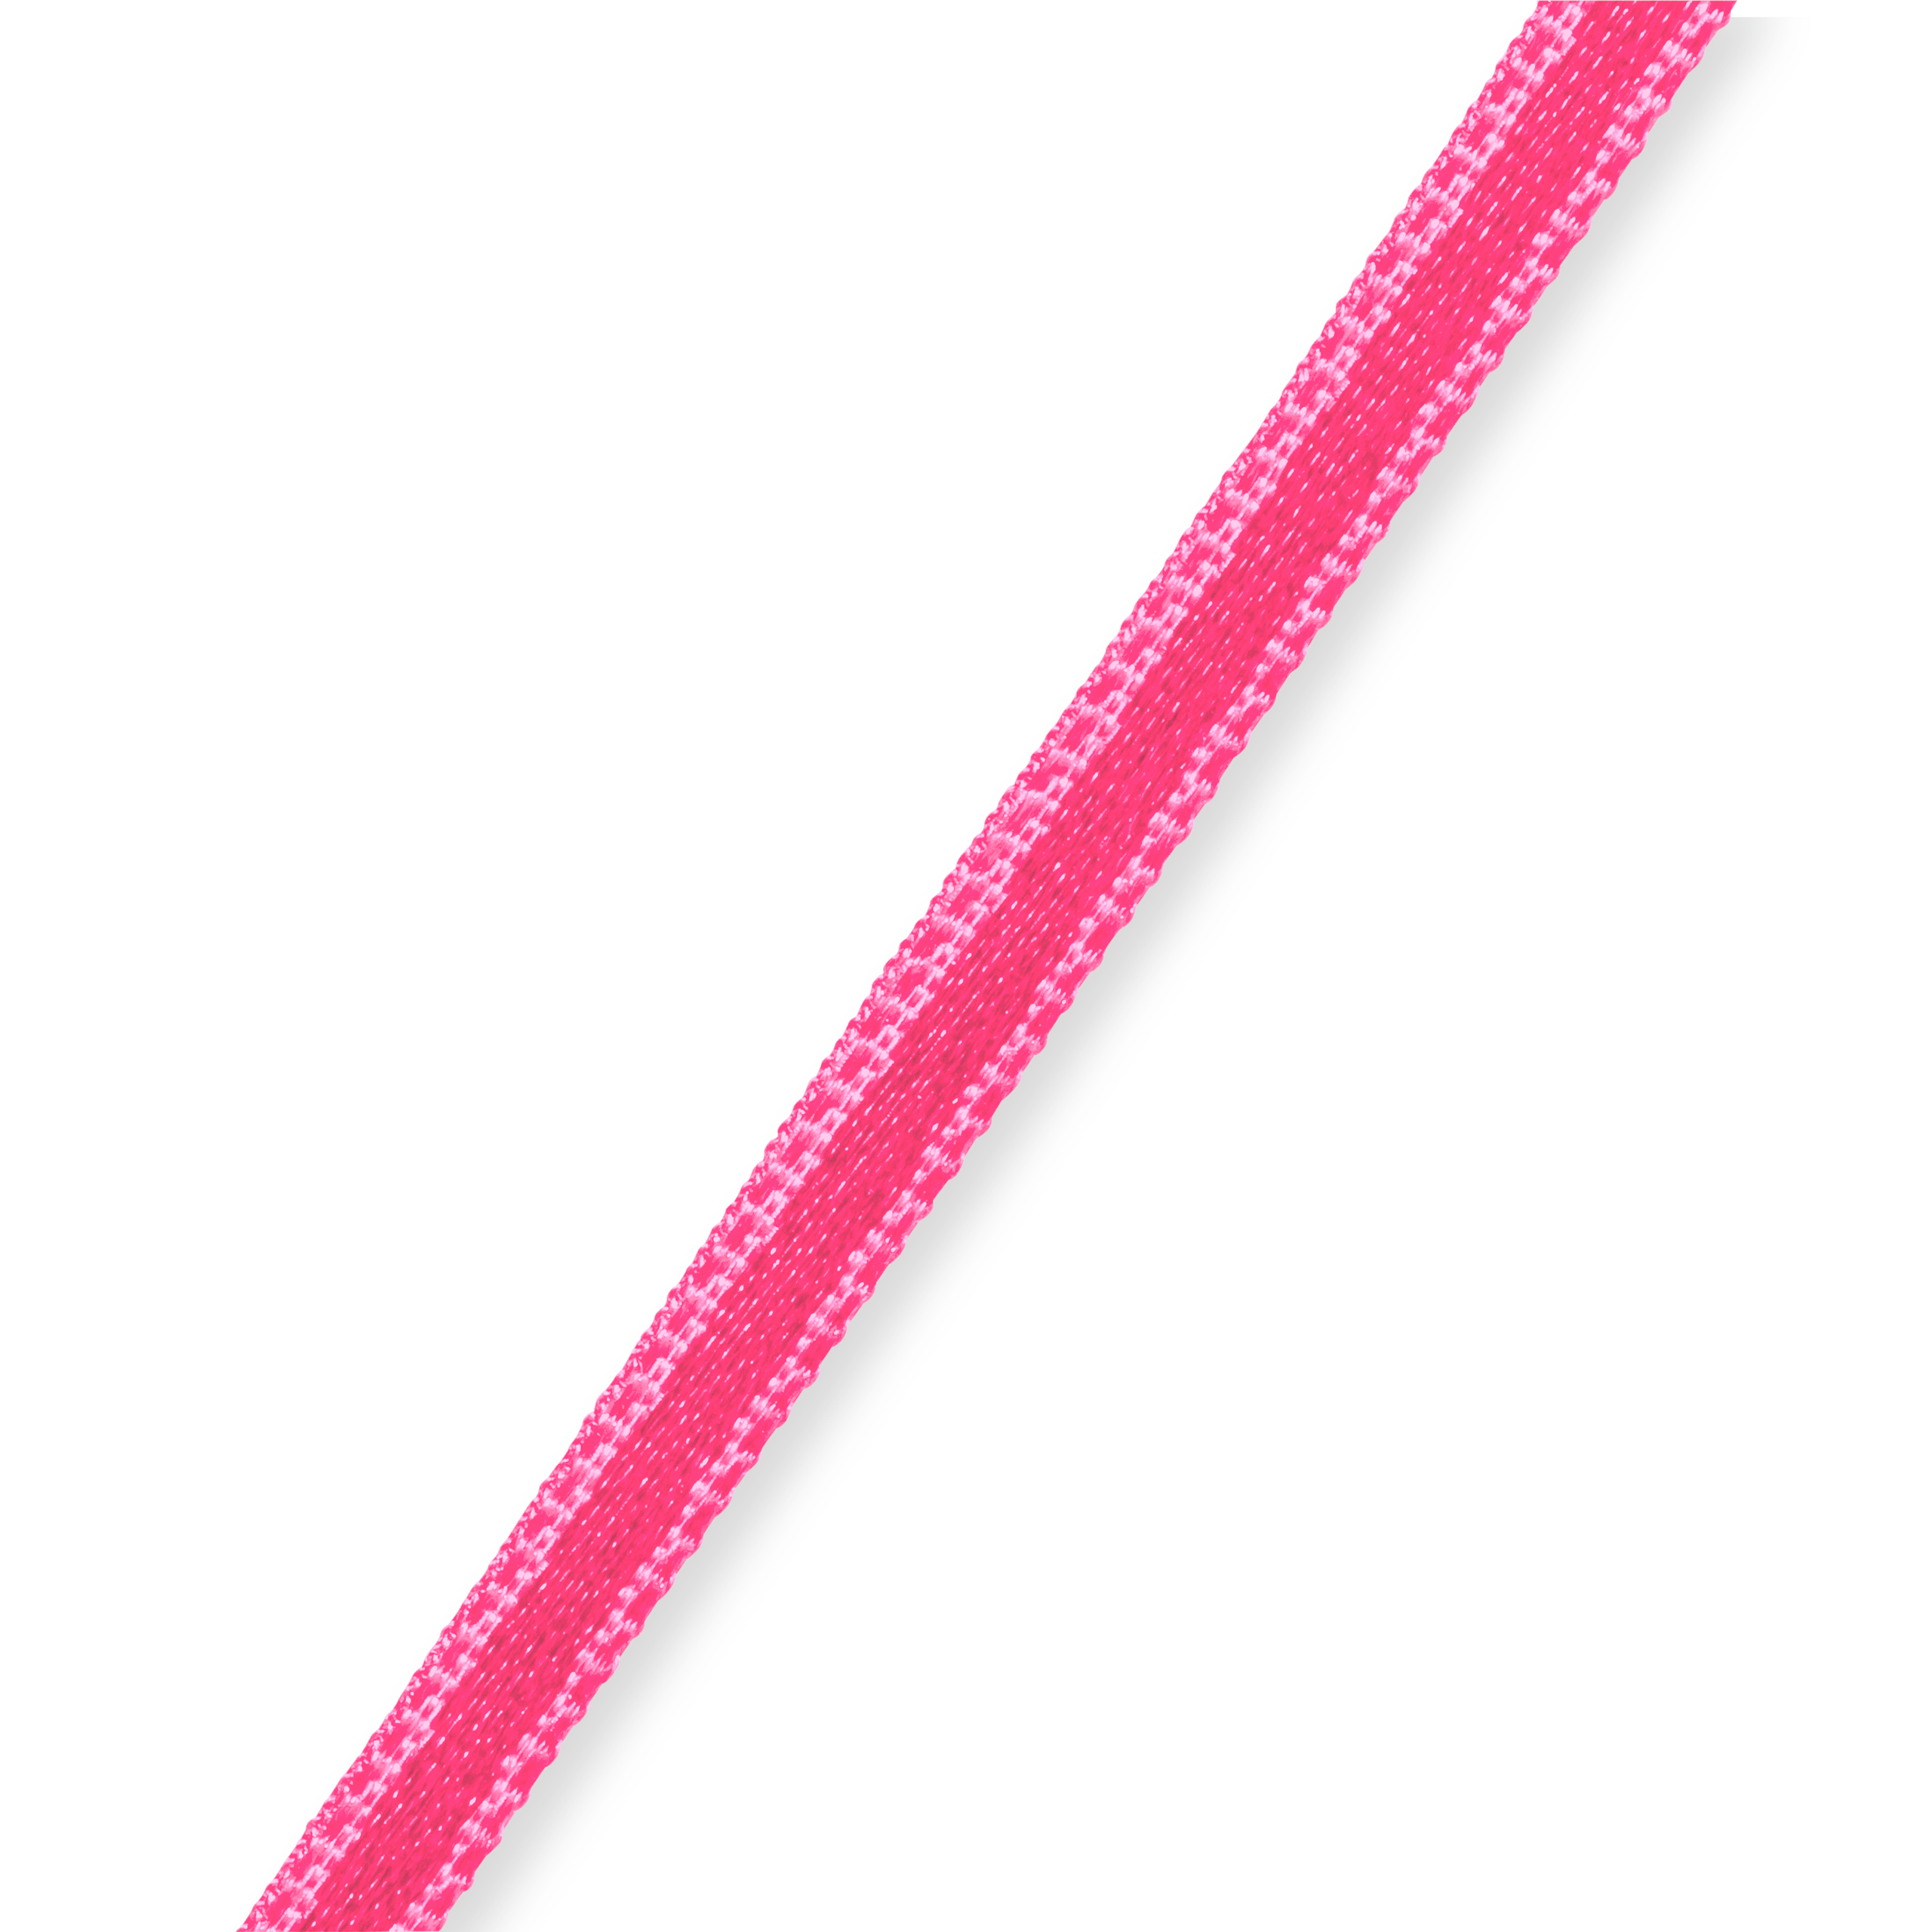 Satin ribbon 3 mm neon pink, 50 m